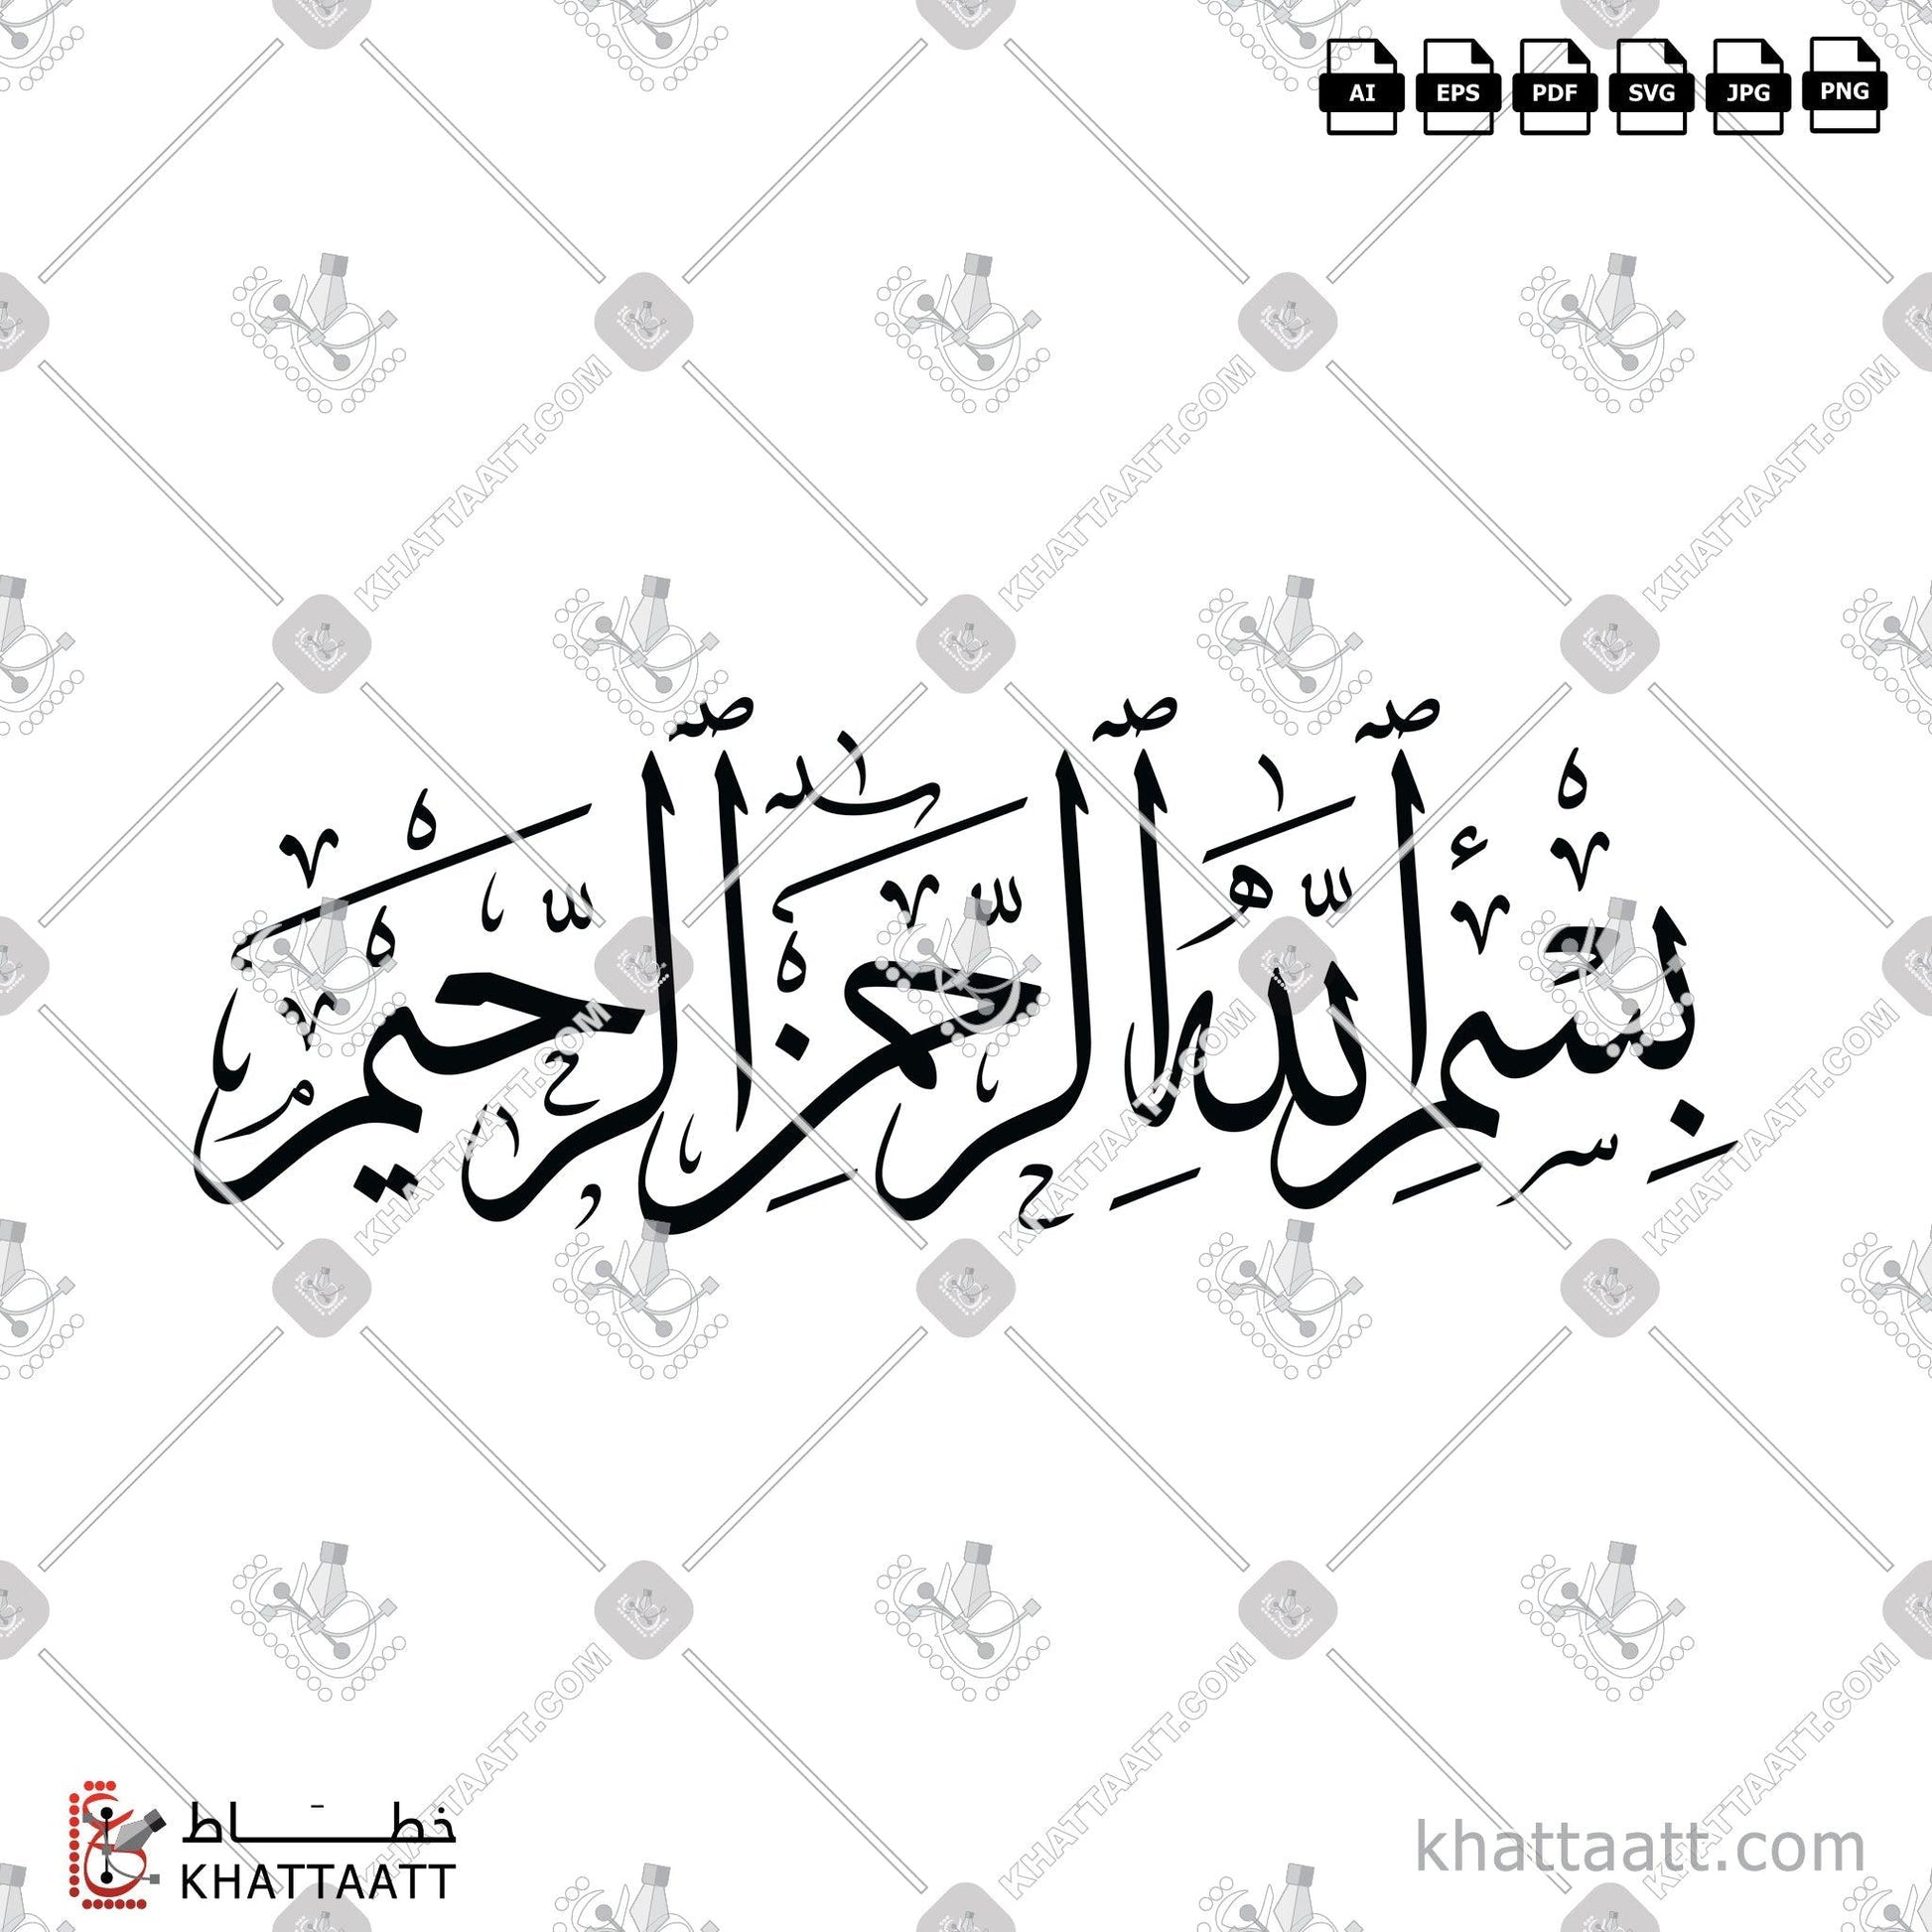 Download Arabic Calligraphy of بسم الله الرحمن الرحيم in Thuluth - خط الثلث in vector and .png